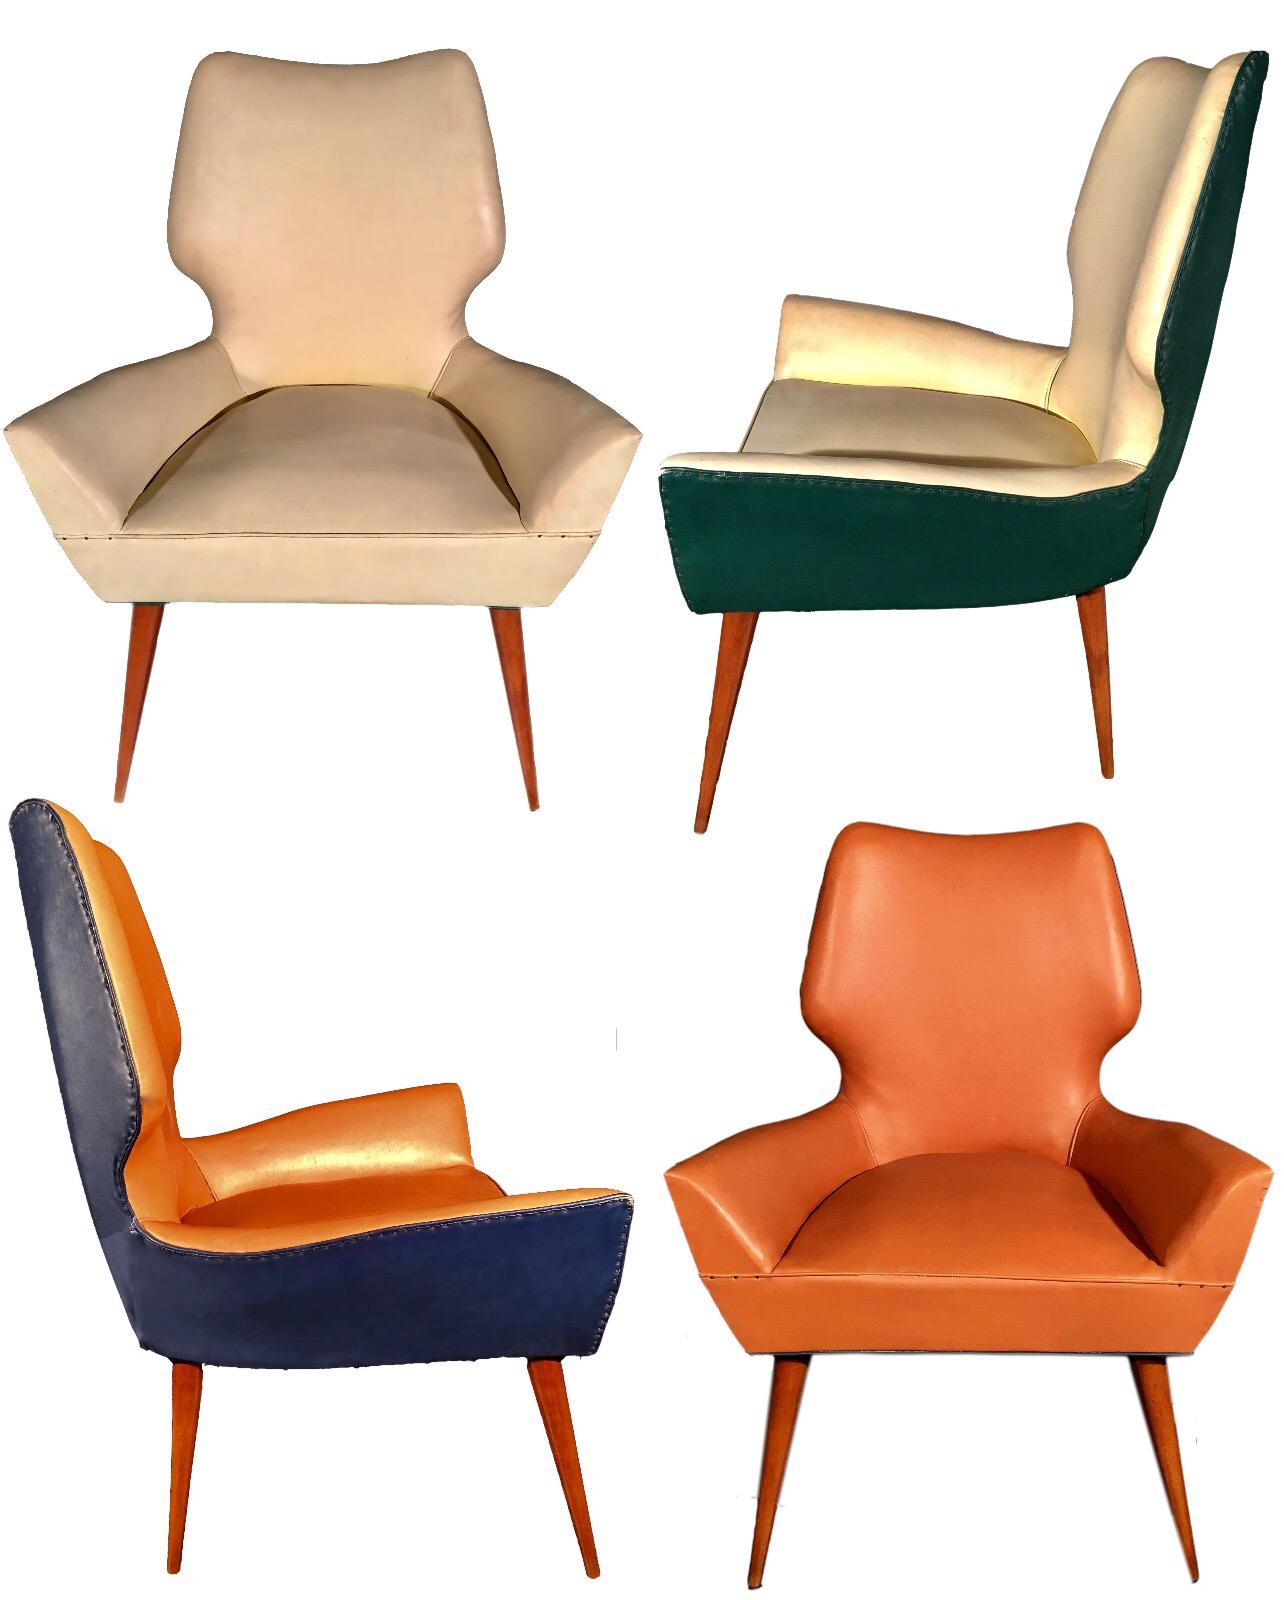 Mid-20th Century Pair of Mid-Century Modern Gio Ponti Style Chairs, 1950s